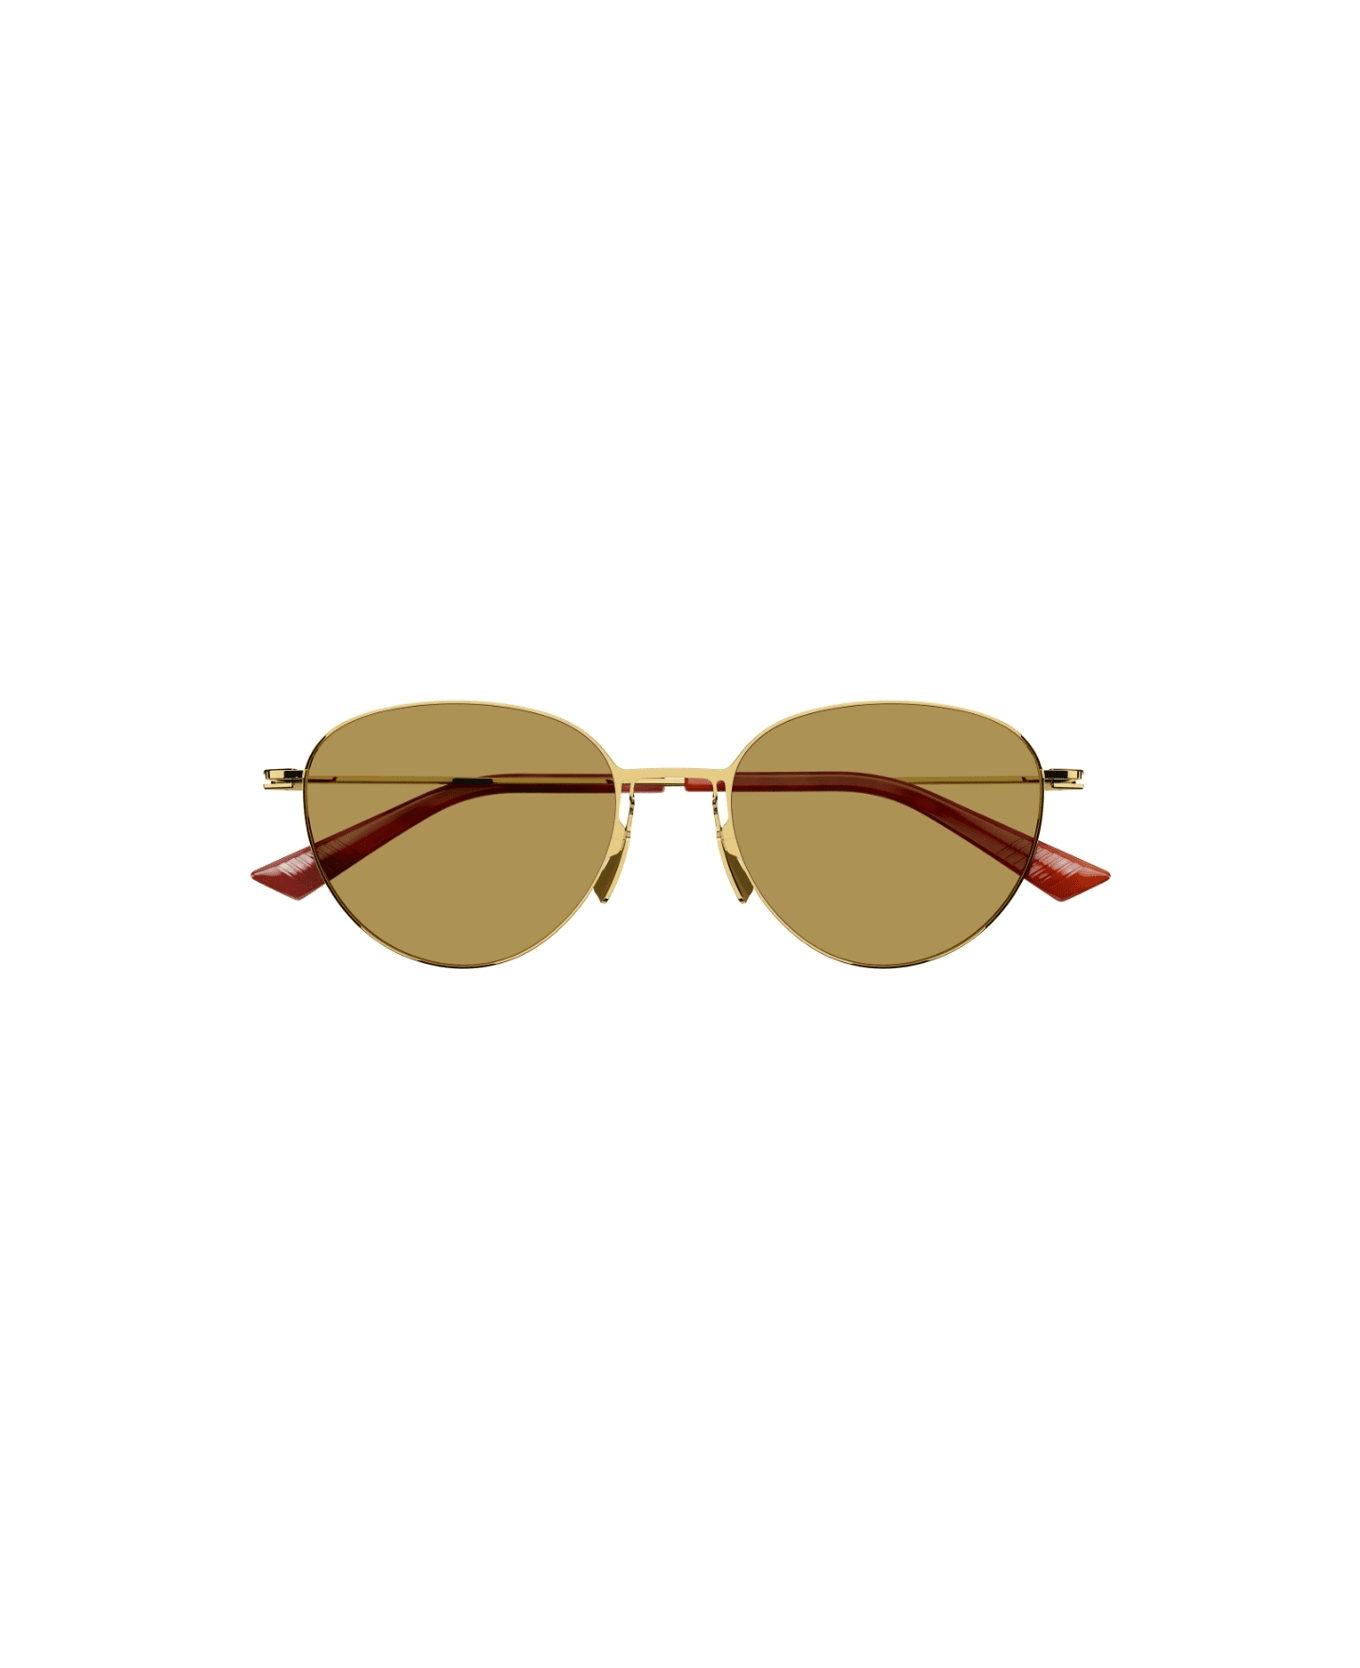 Bottega Veneta Eyewear BV1268s 004 Leggerissimo Sunglasses - Gold